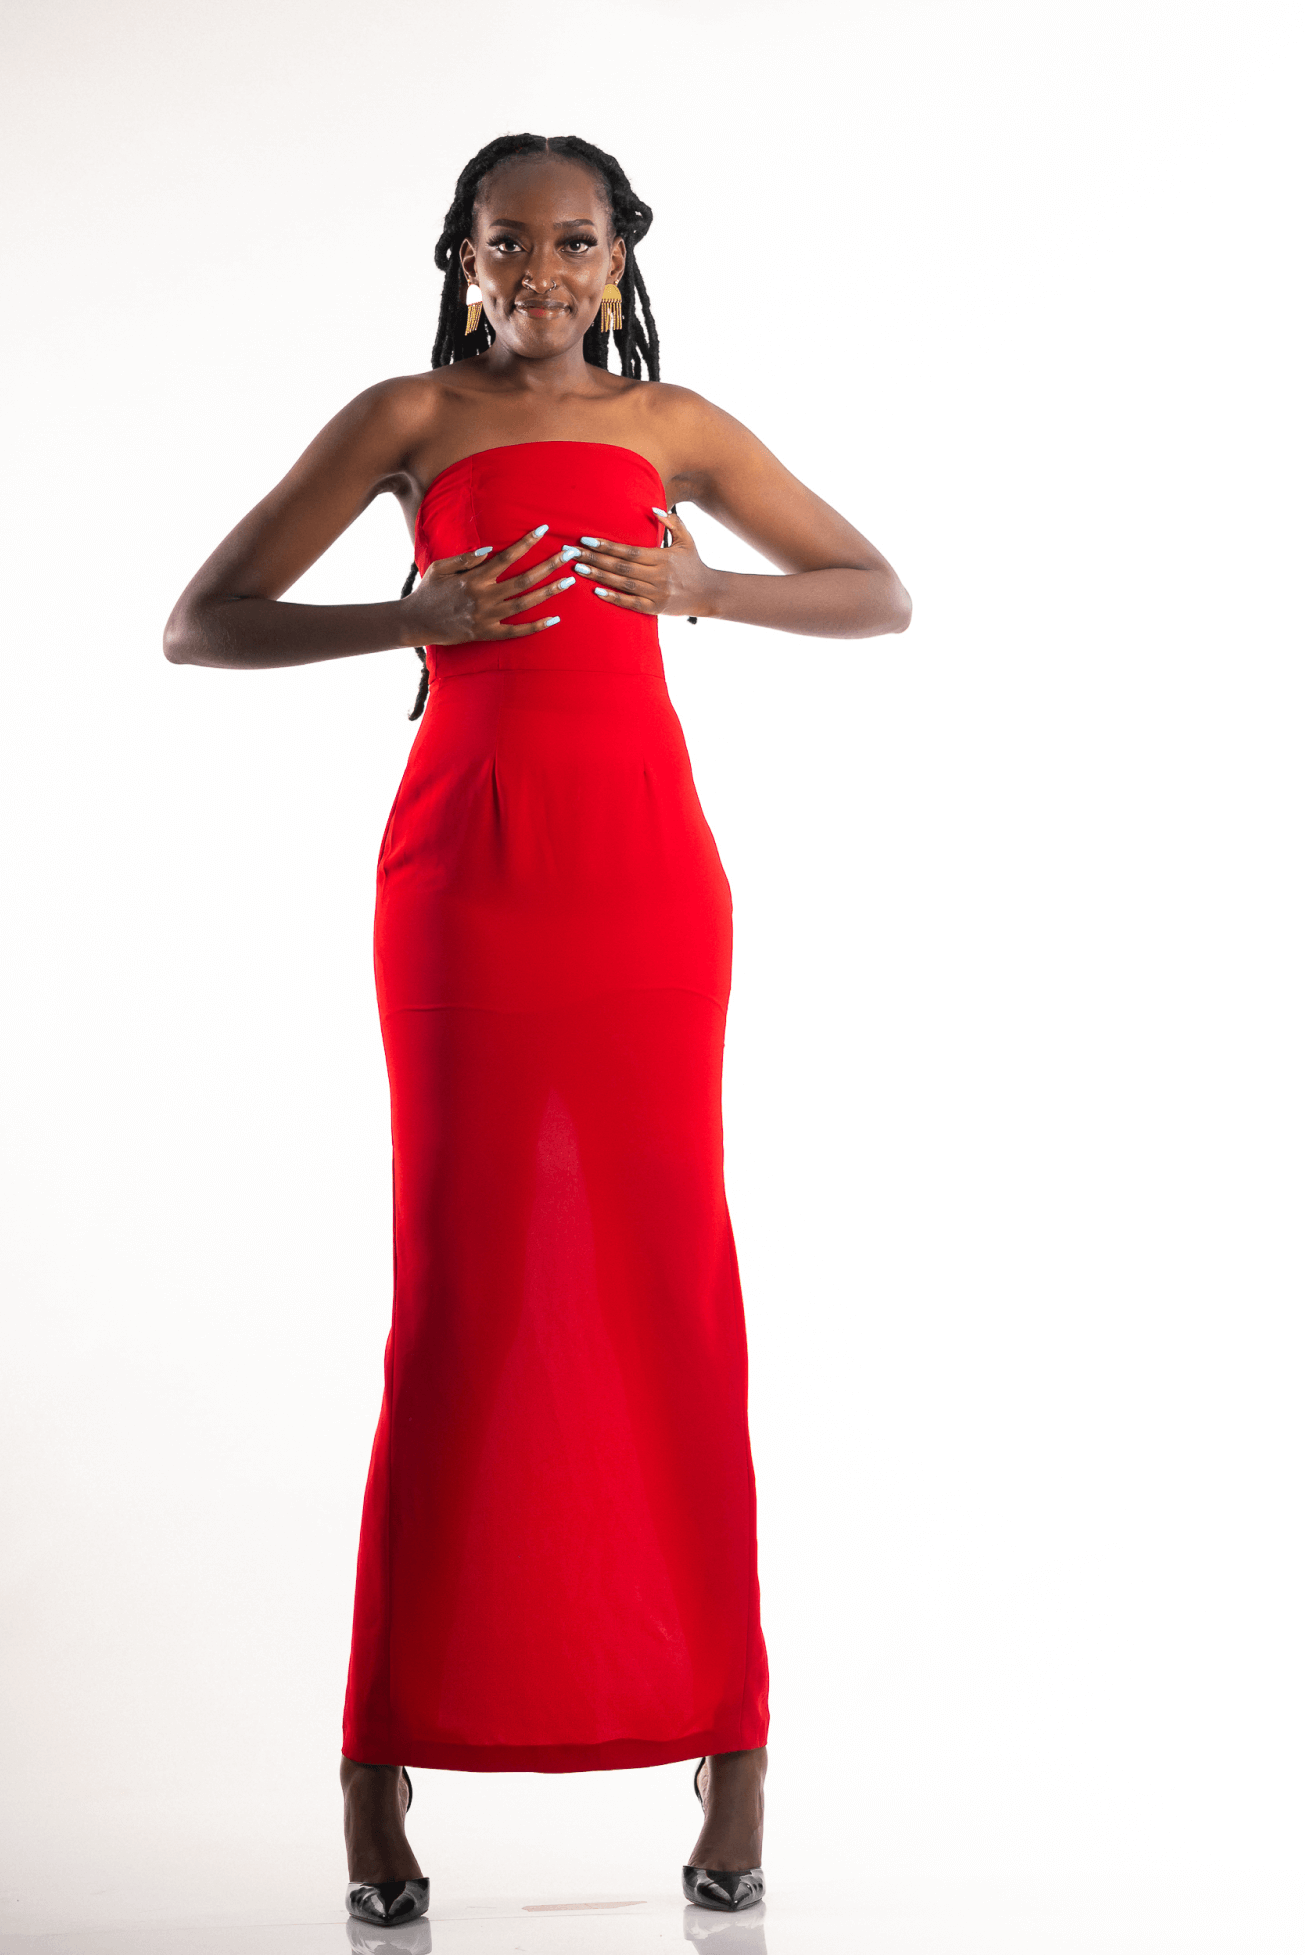 PHOTOS: Exquisite African Dresses For Ladies - Latest & Trendy